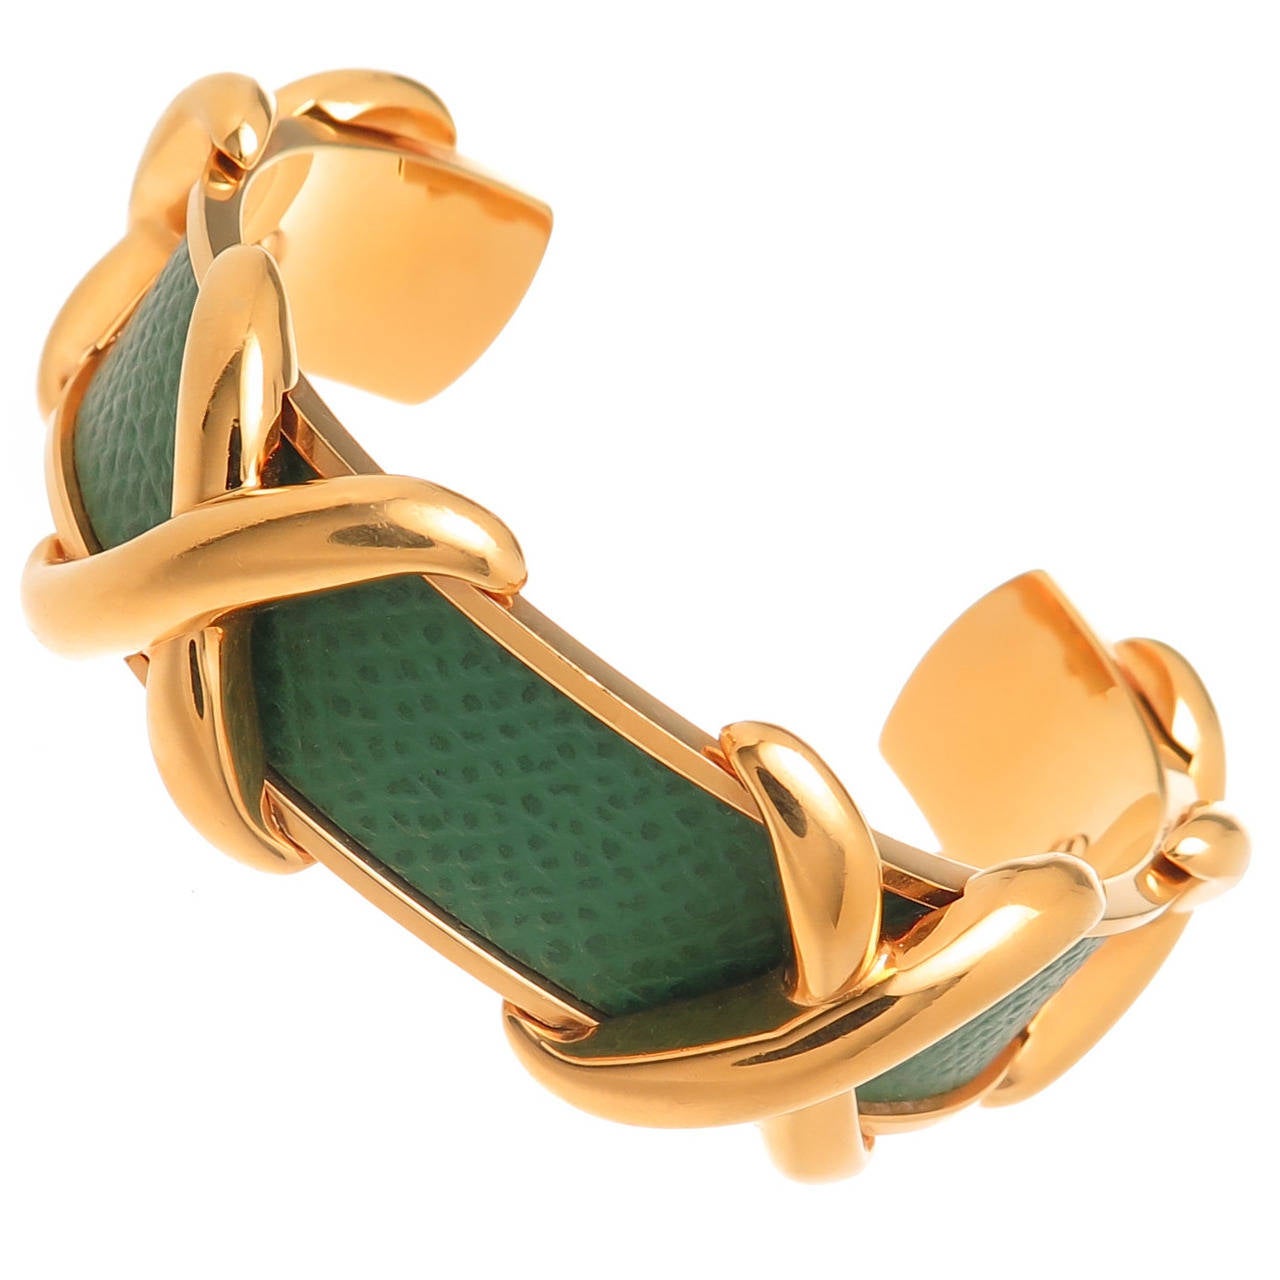 Hermes Couchevel Cuff Bracelet